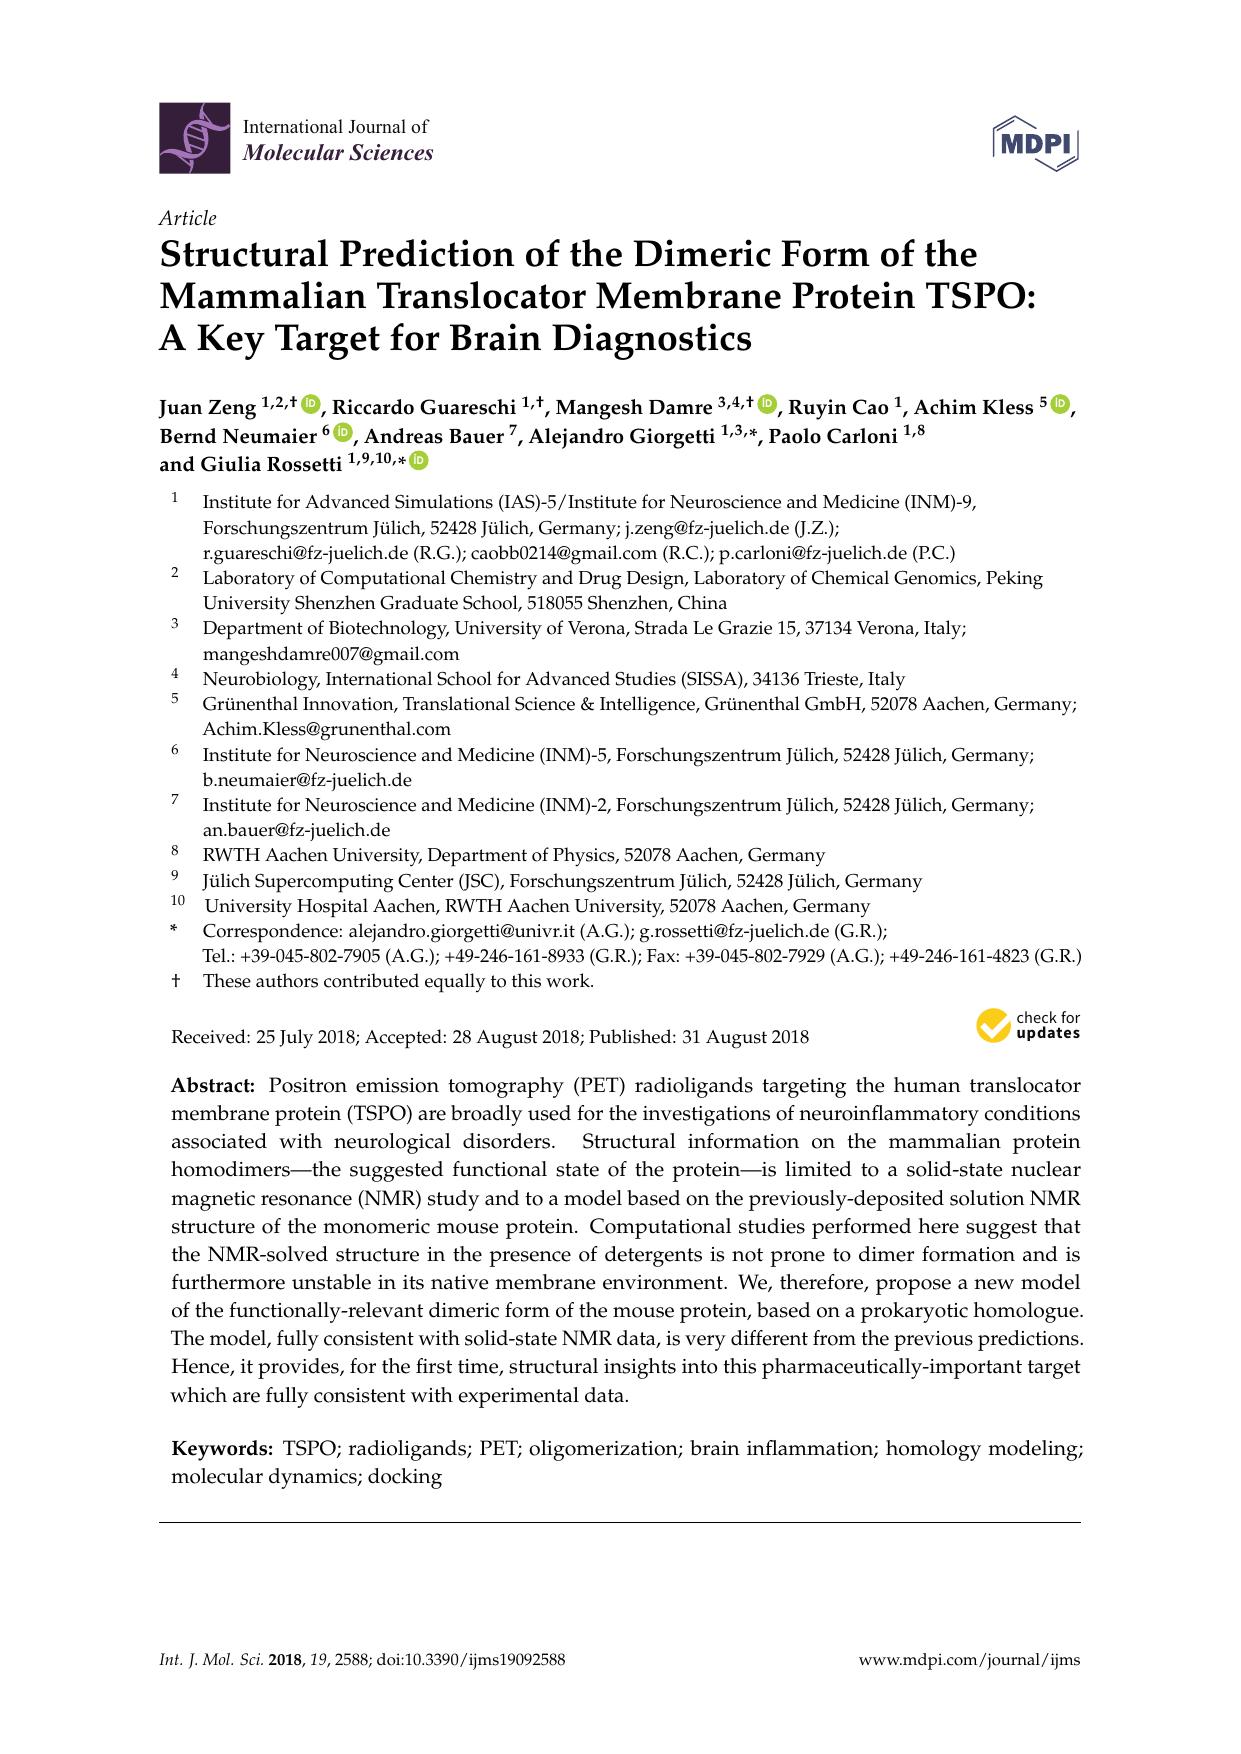 Structural Prediction of the Dimeric Form of the Mammalian Translocator Membrane Protein TSPO: A Key Target for Brain Diagnostics